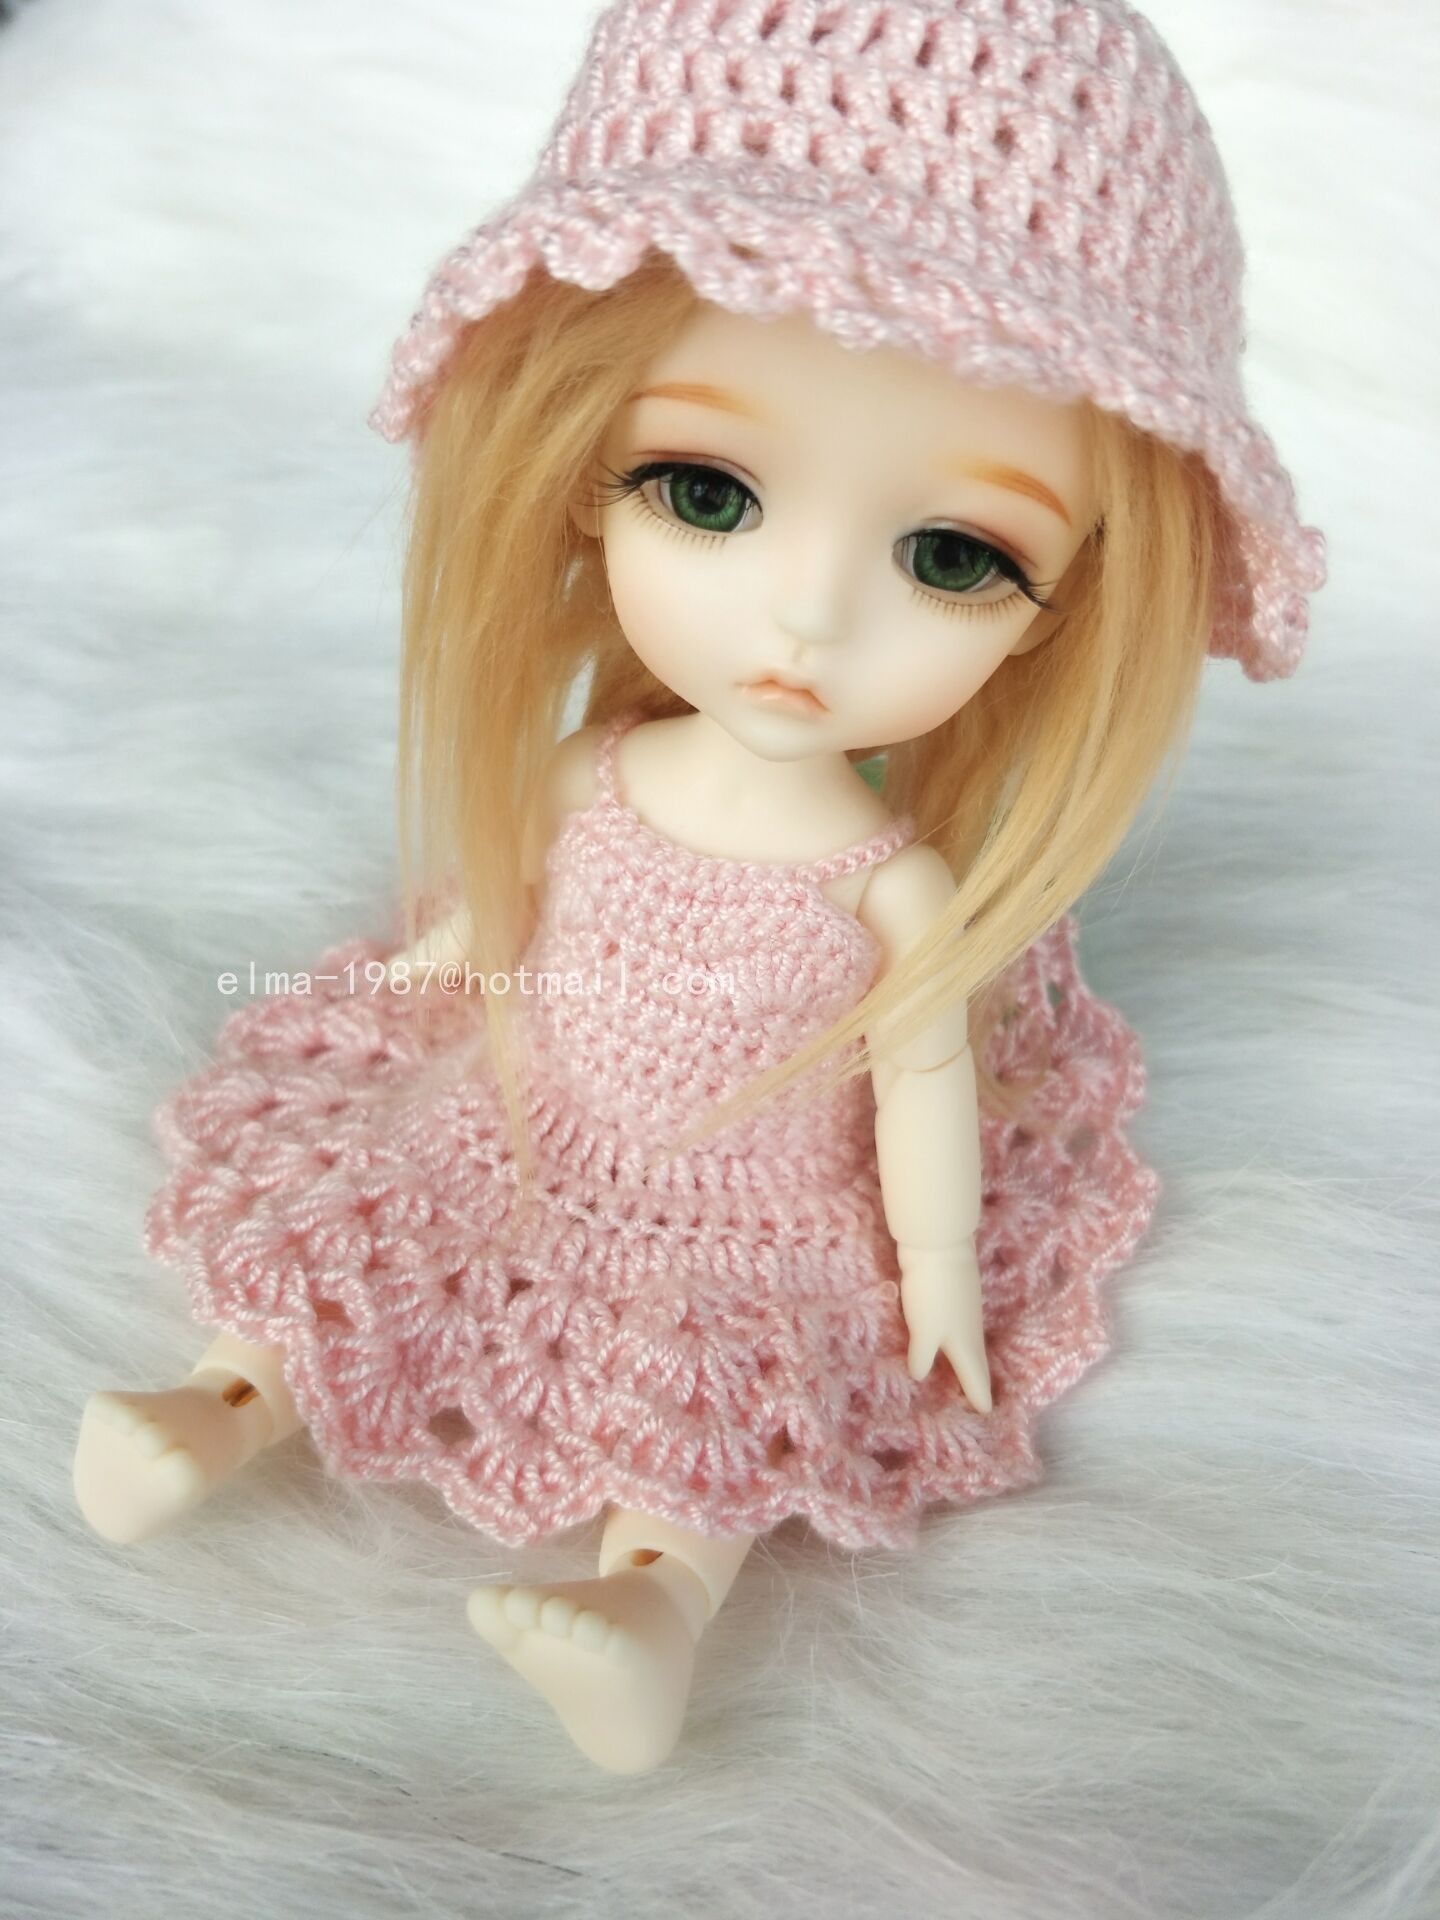 Crochet pink dress set for 1/8 size BJD - Click Image to Close